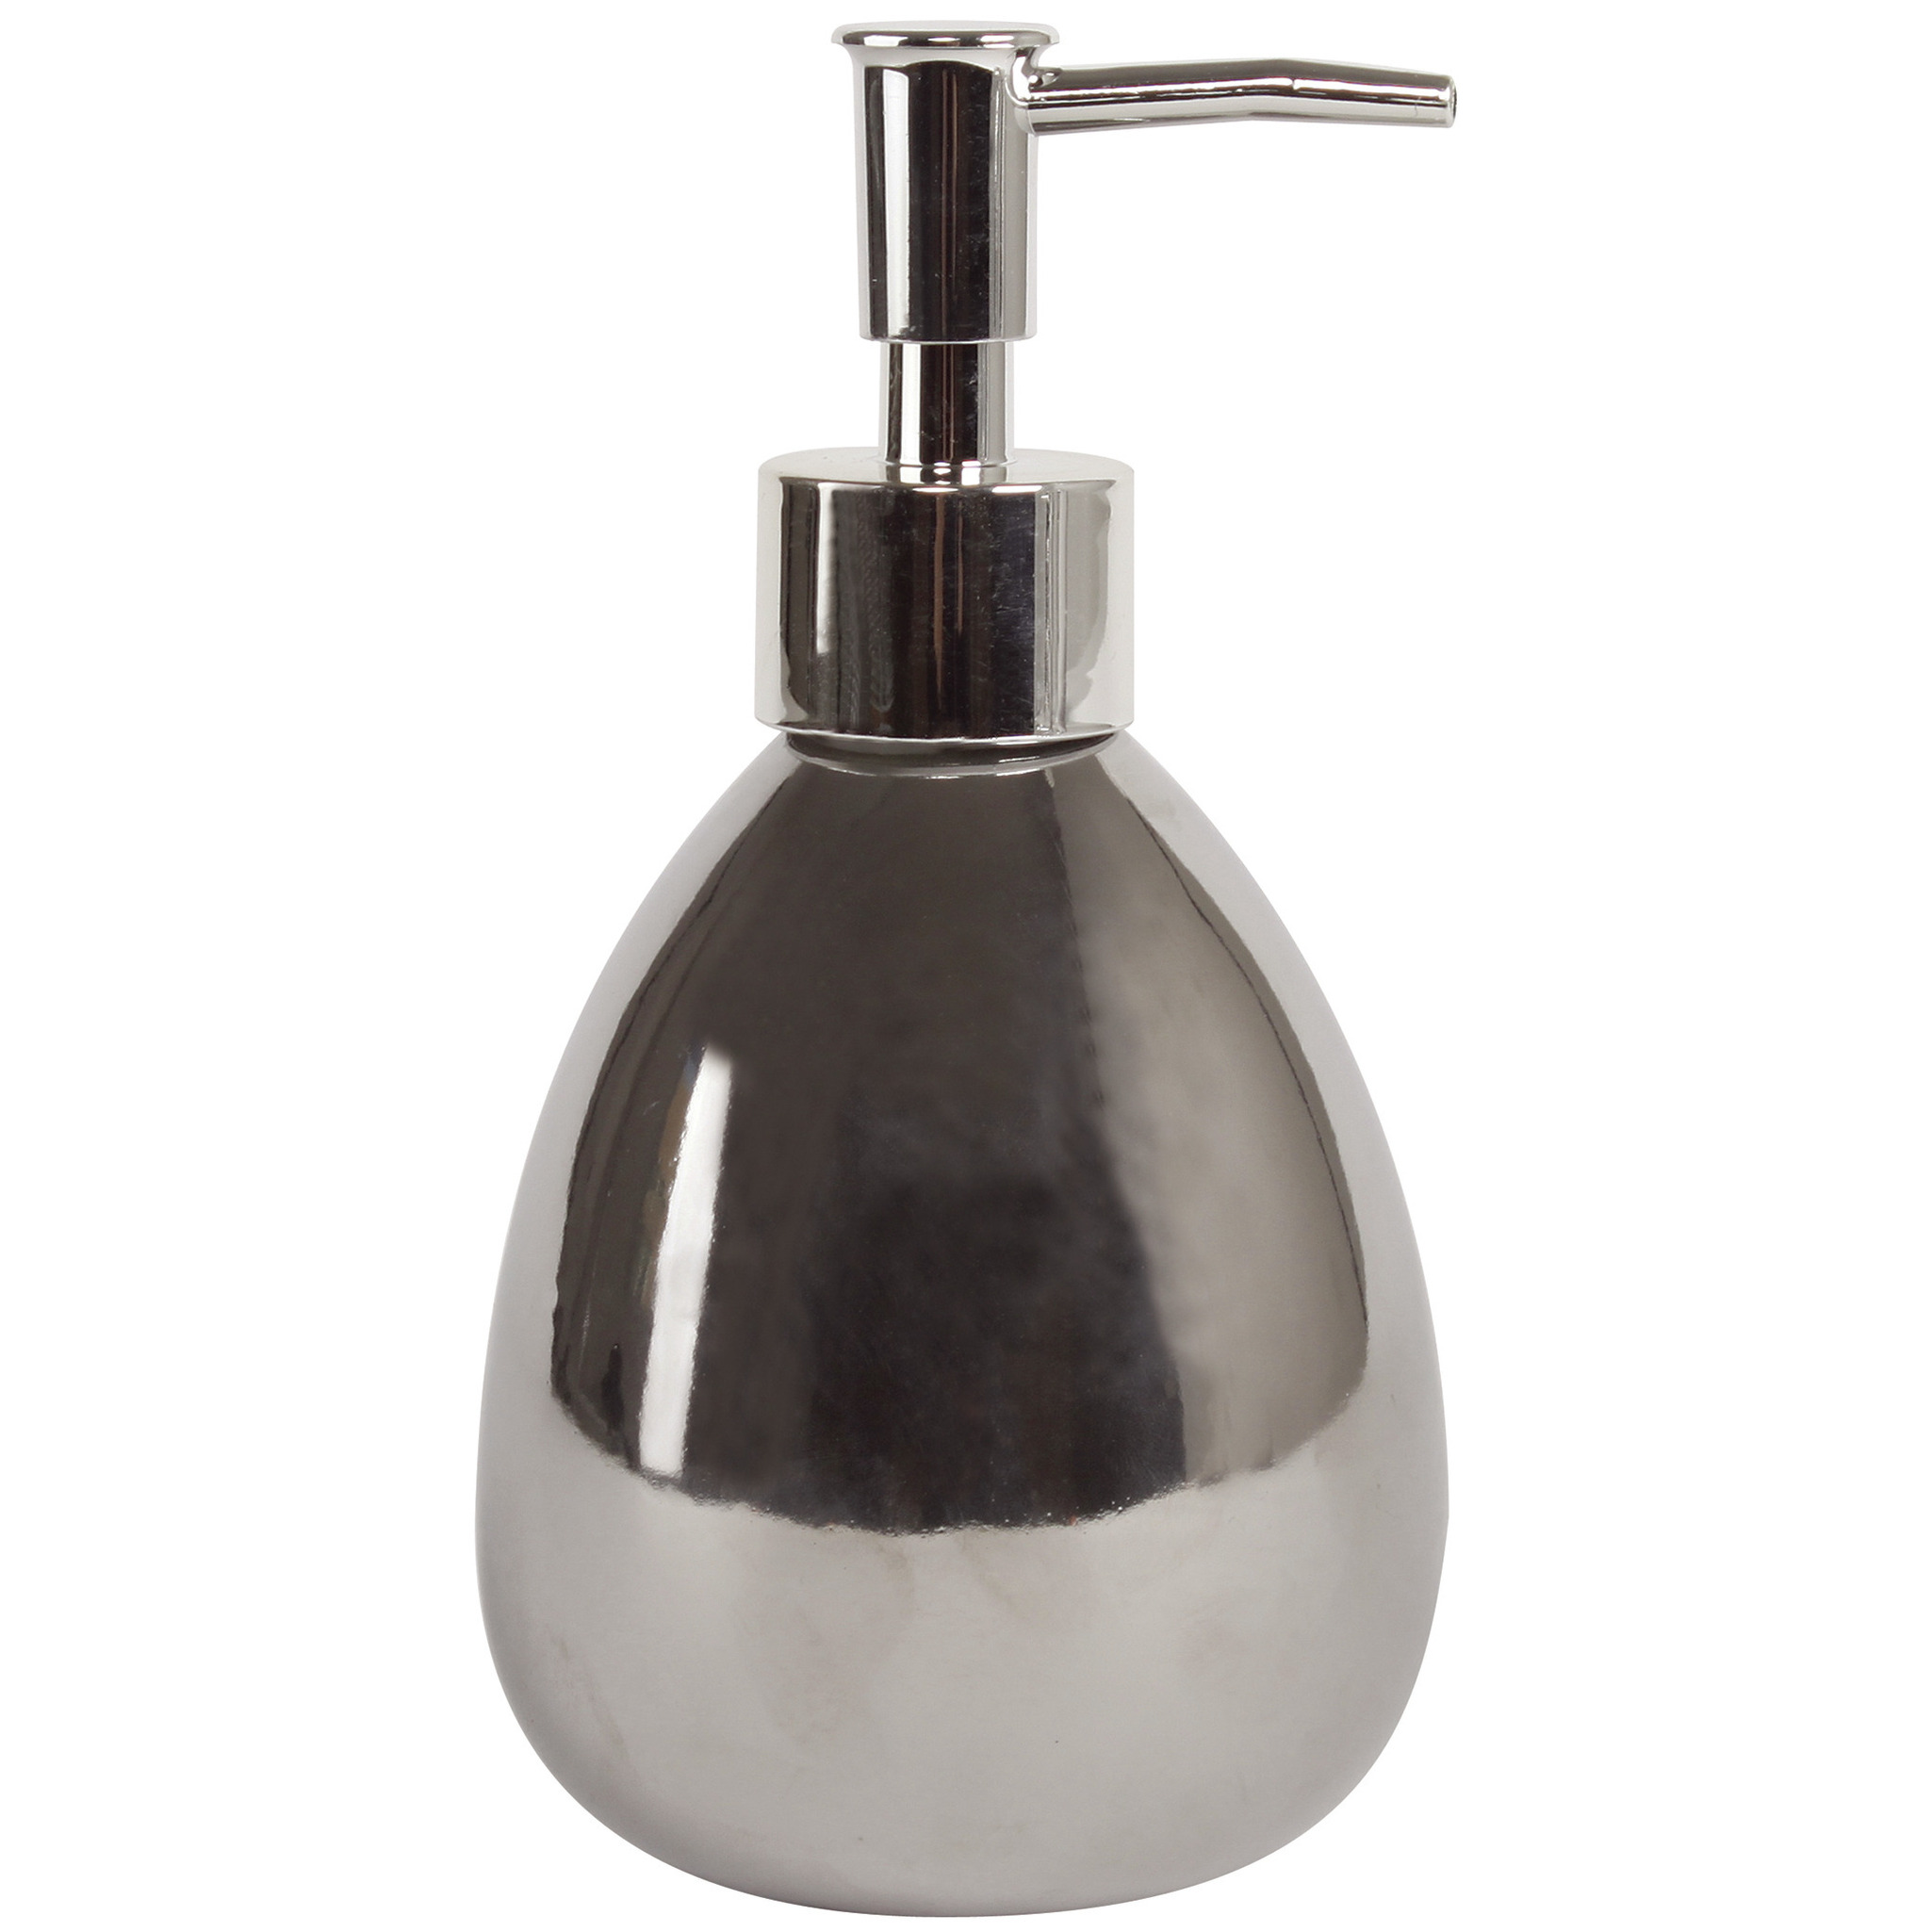 Zeeppompje-zeepdispenser Kymi keramiek zilver kleur 9 x 16 cm 260 ml